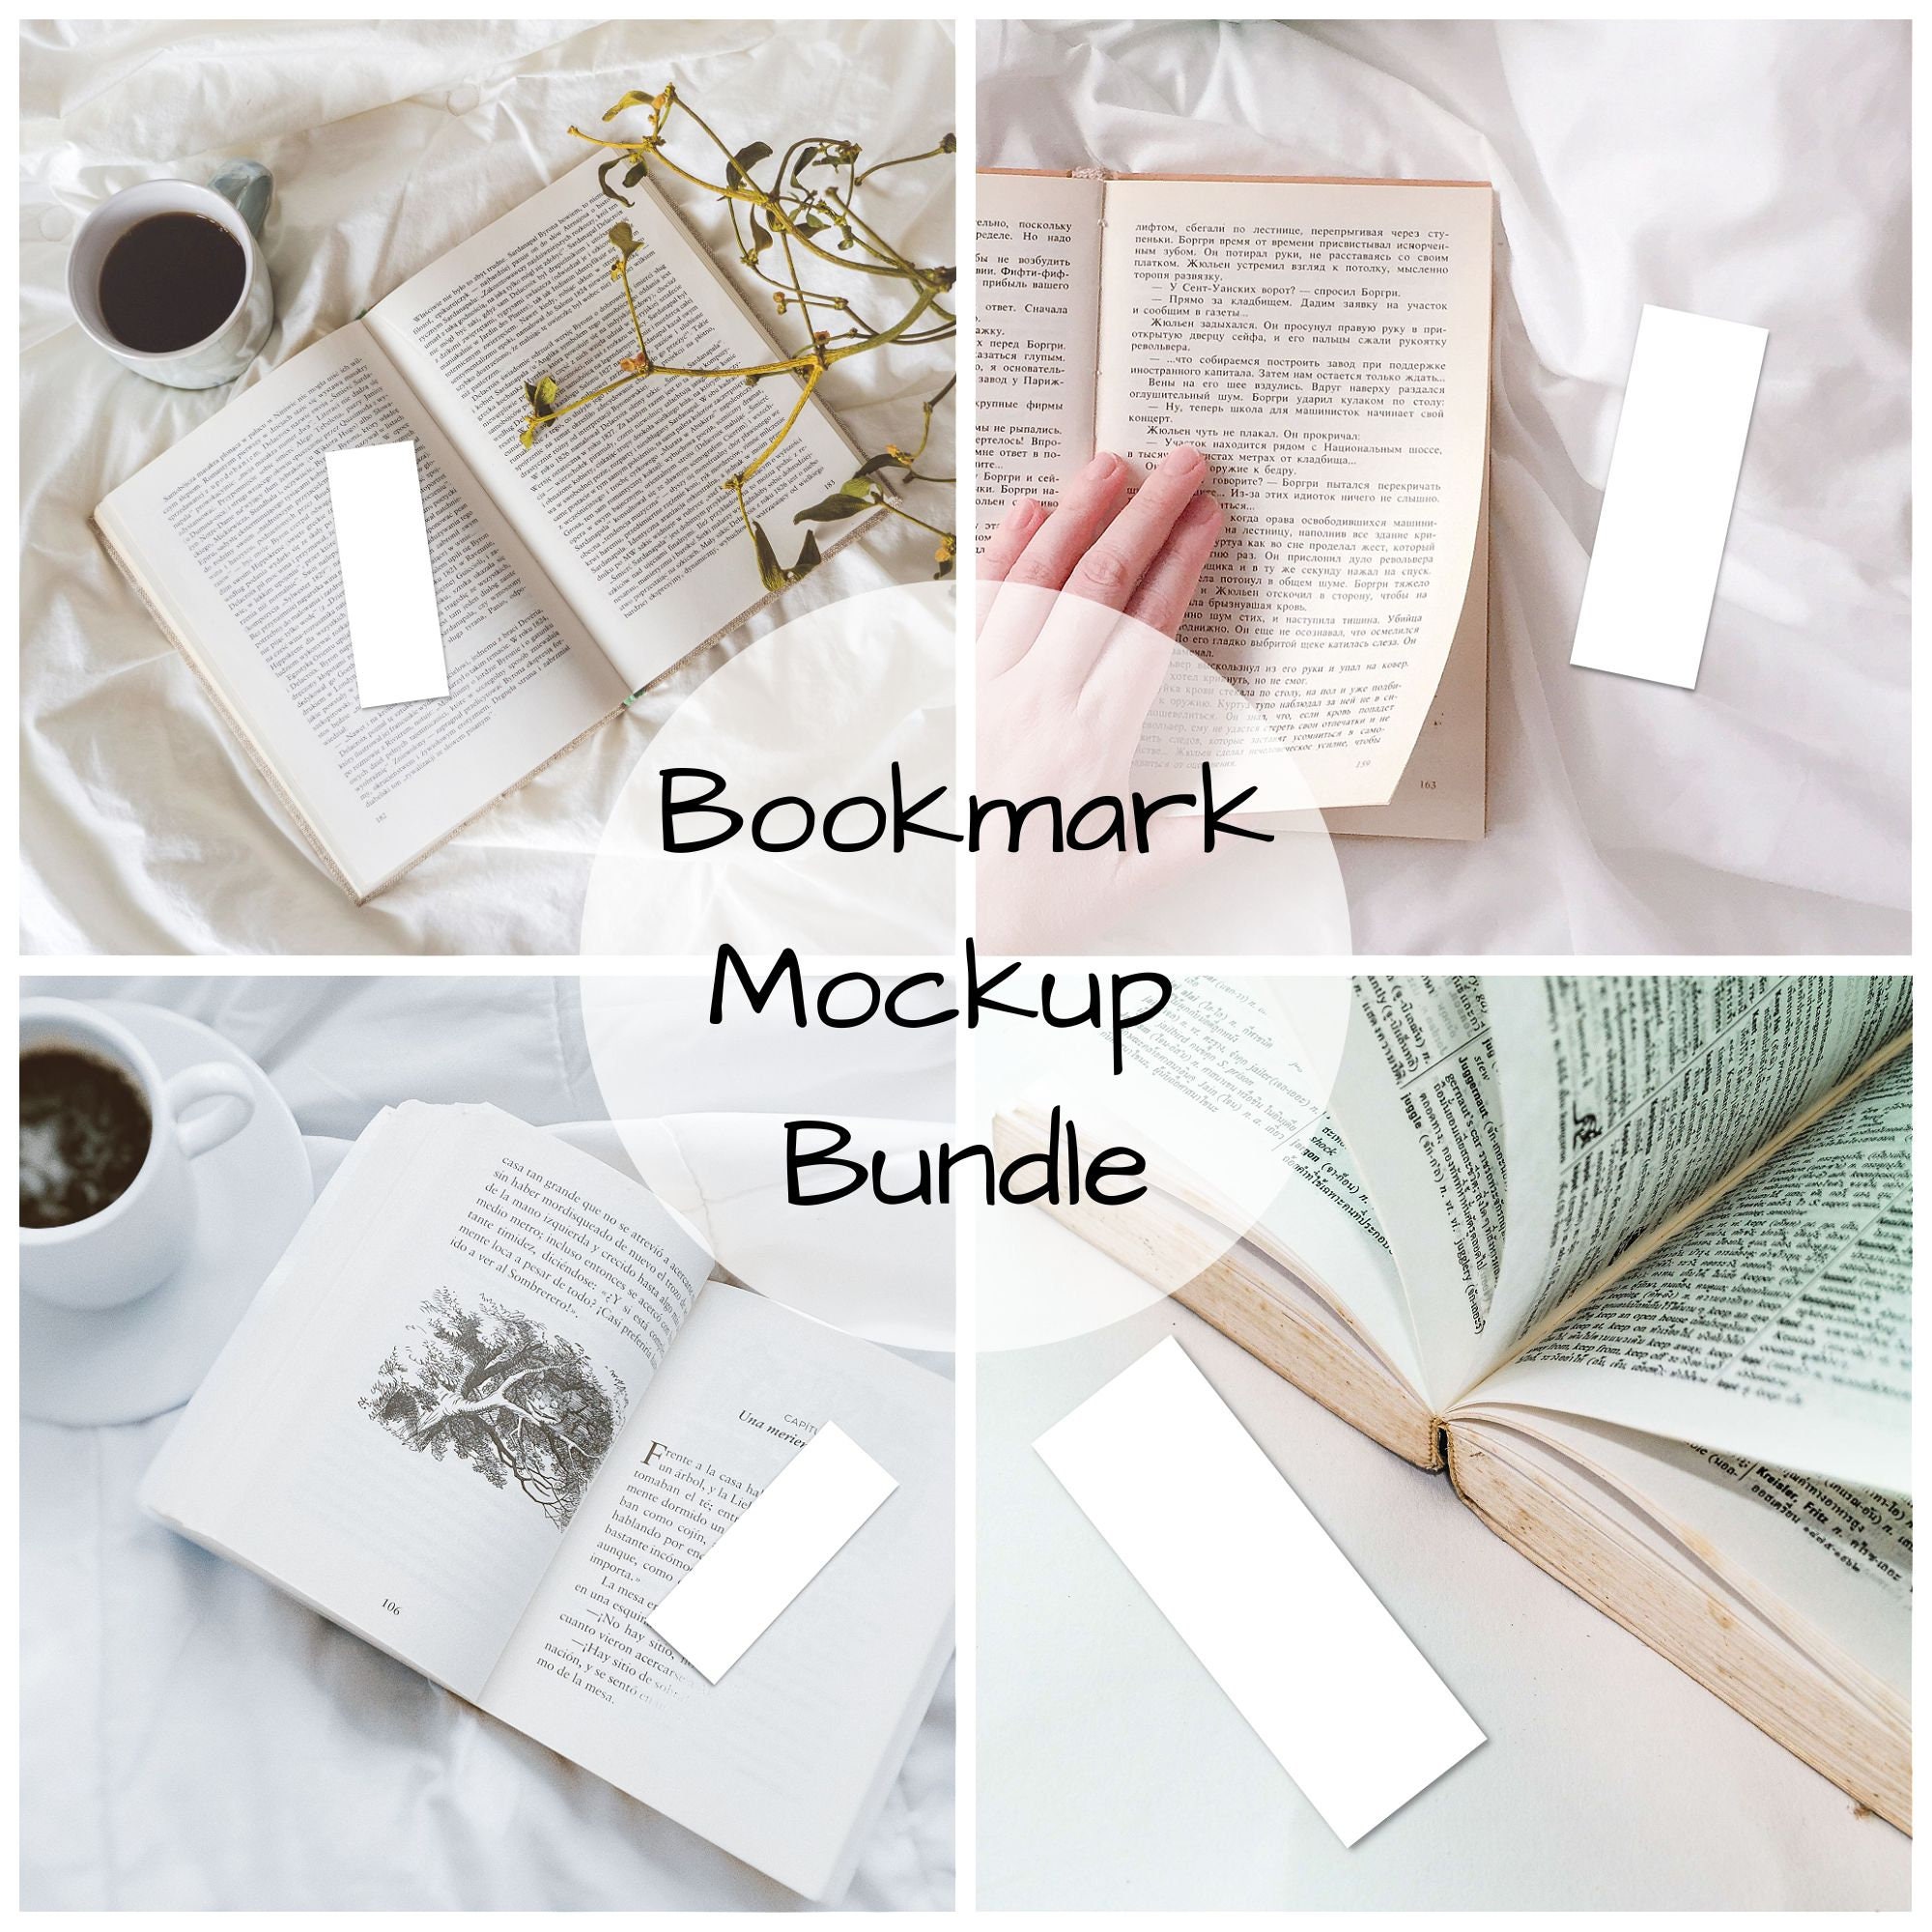 Bookmark Acrylic Blanks  Customisable Acrylics Online